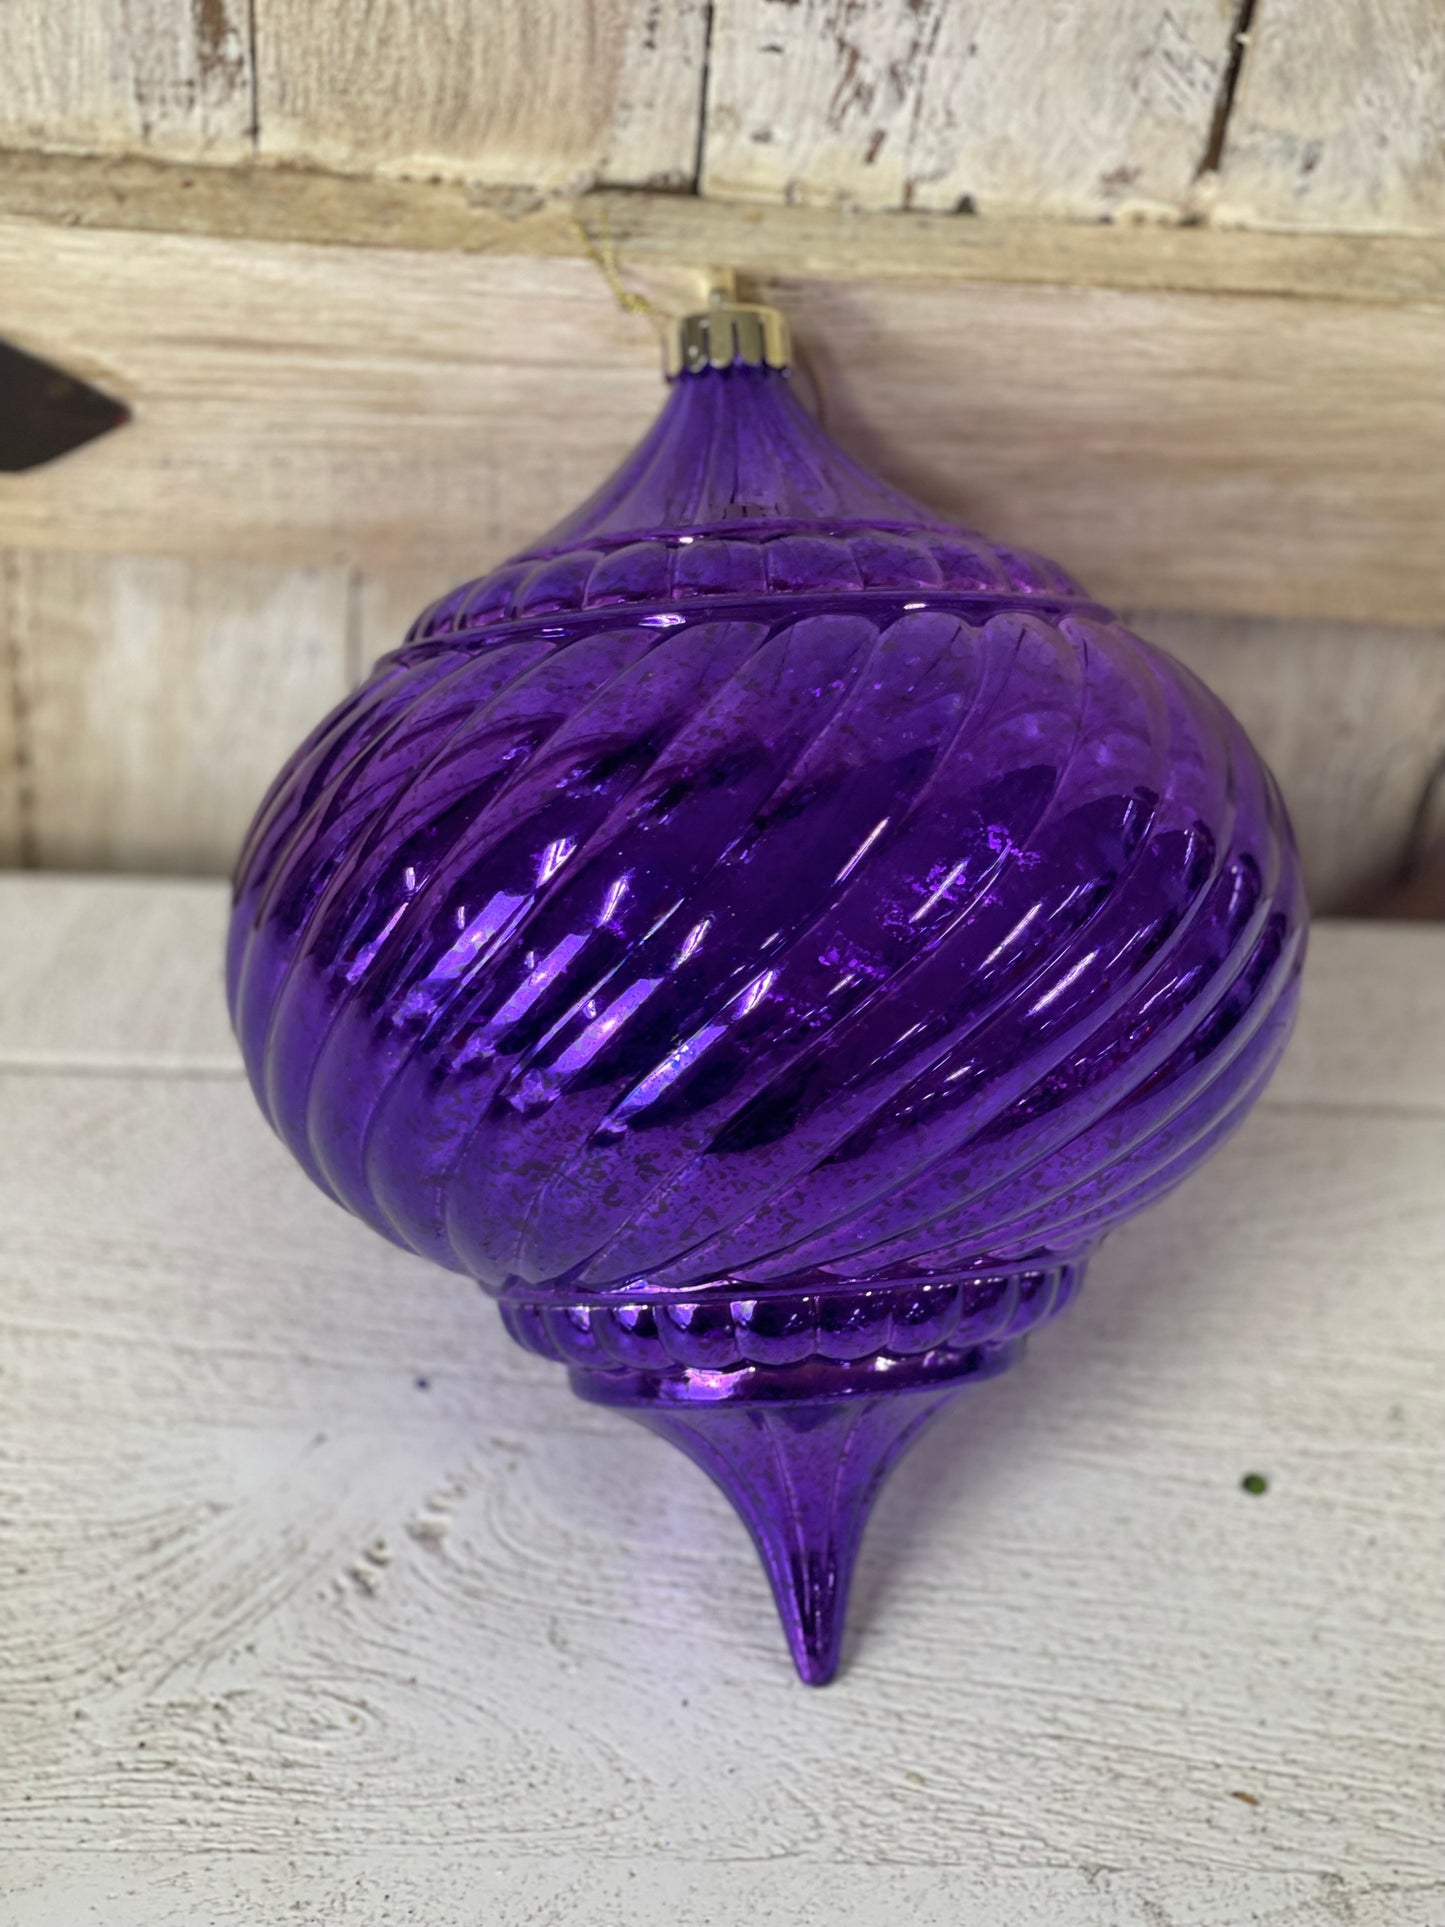 8 Inch Shiny Purple Swirl And Striped Onion Ornament